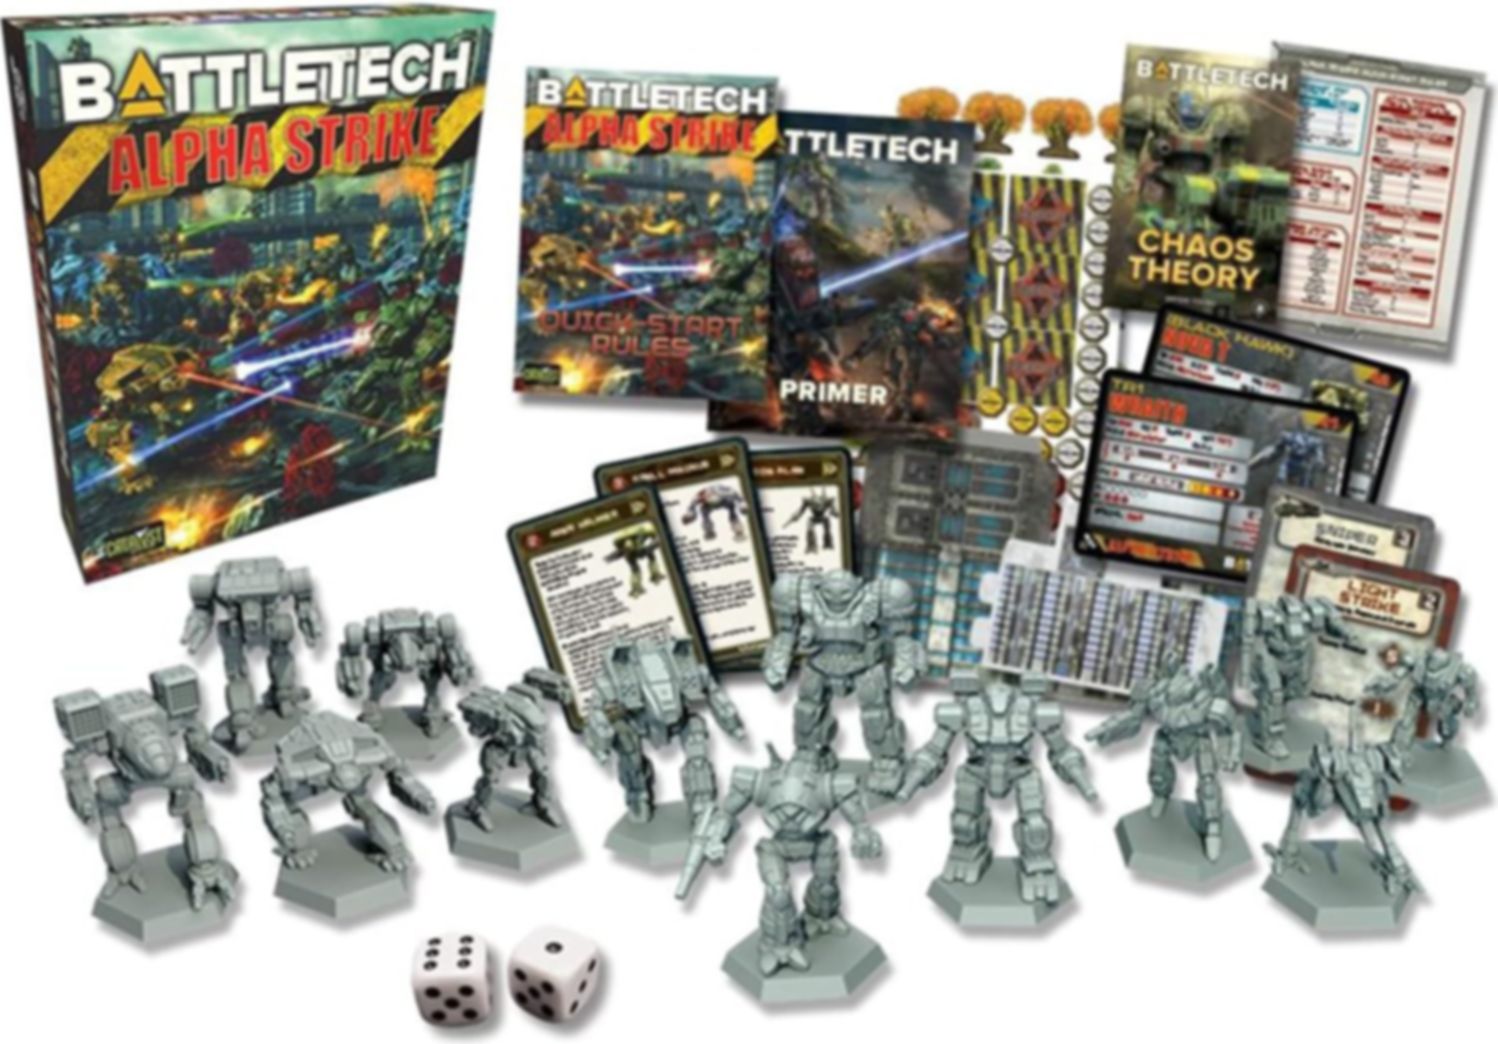 BattleTech: Alpha Strike Boxed Set komponenten